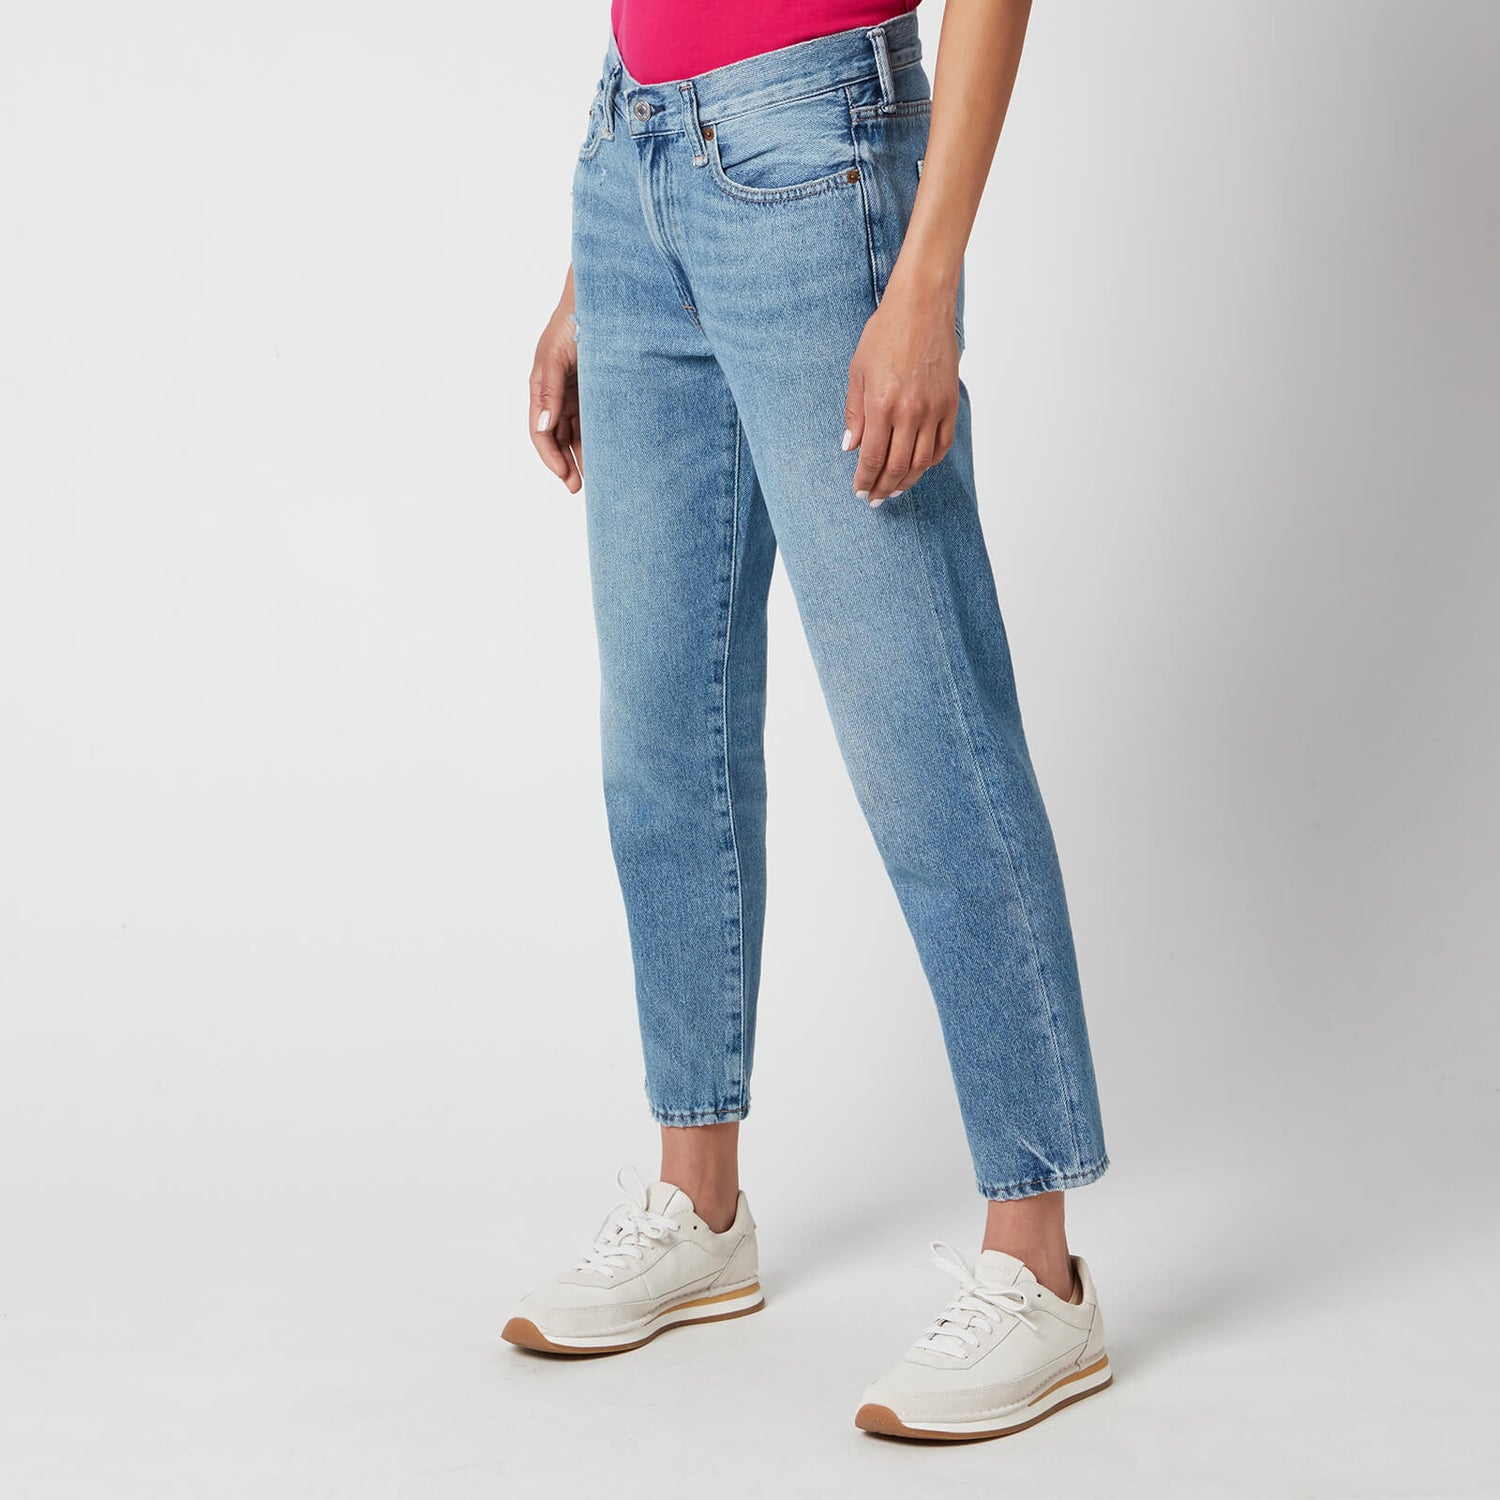 Polo Ralph Lauren Women's Avery Boyfriend Jeans - Light Indigo